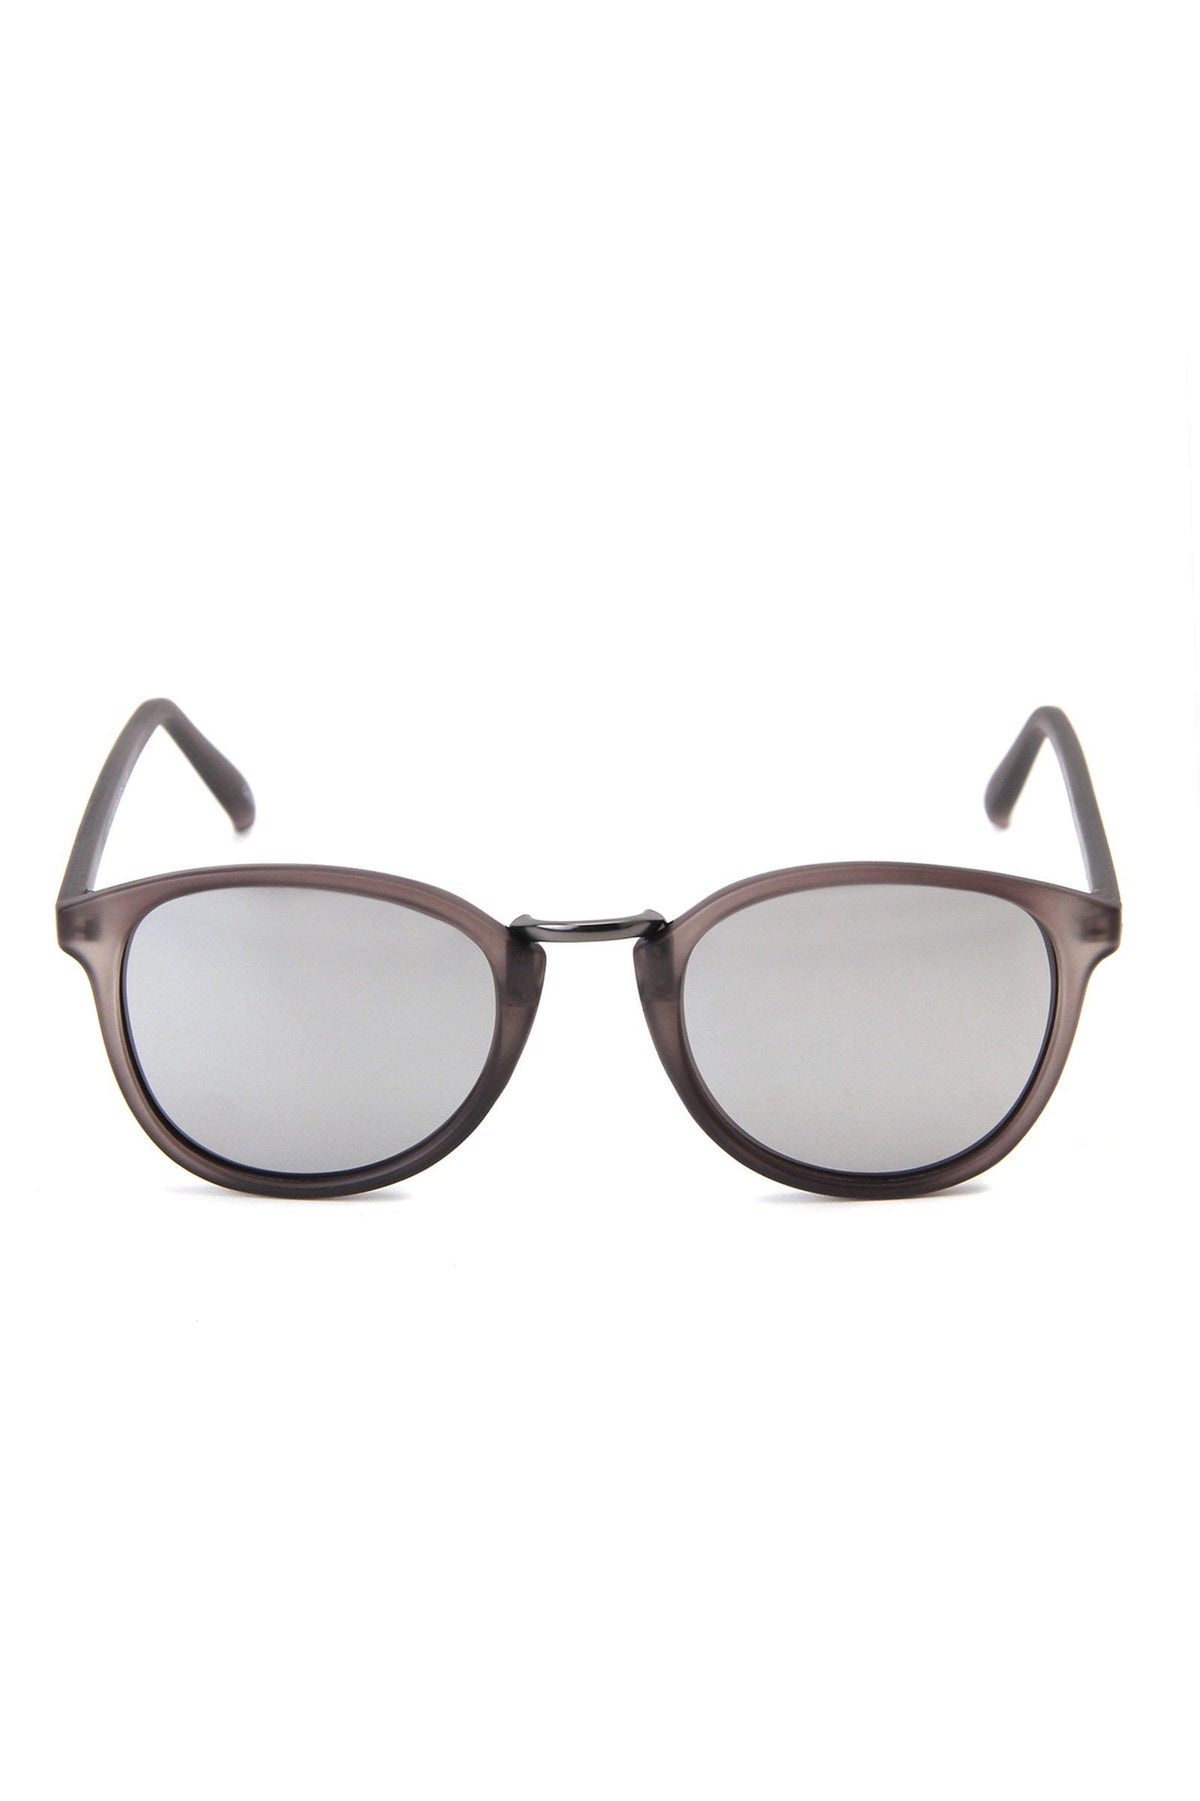 Lucky Brand Indio Wire Bridge Sunglasses - Women's Ladies Accessories Sunglasses Light Grey